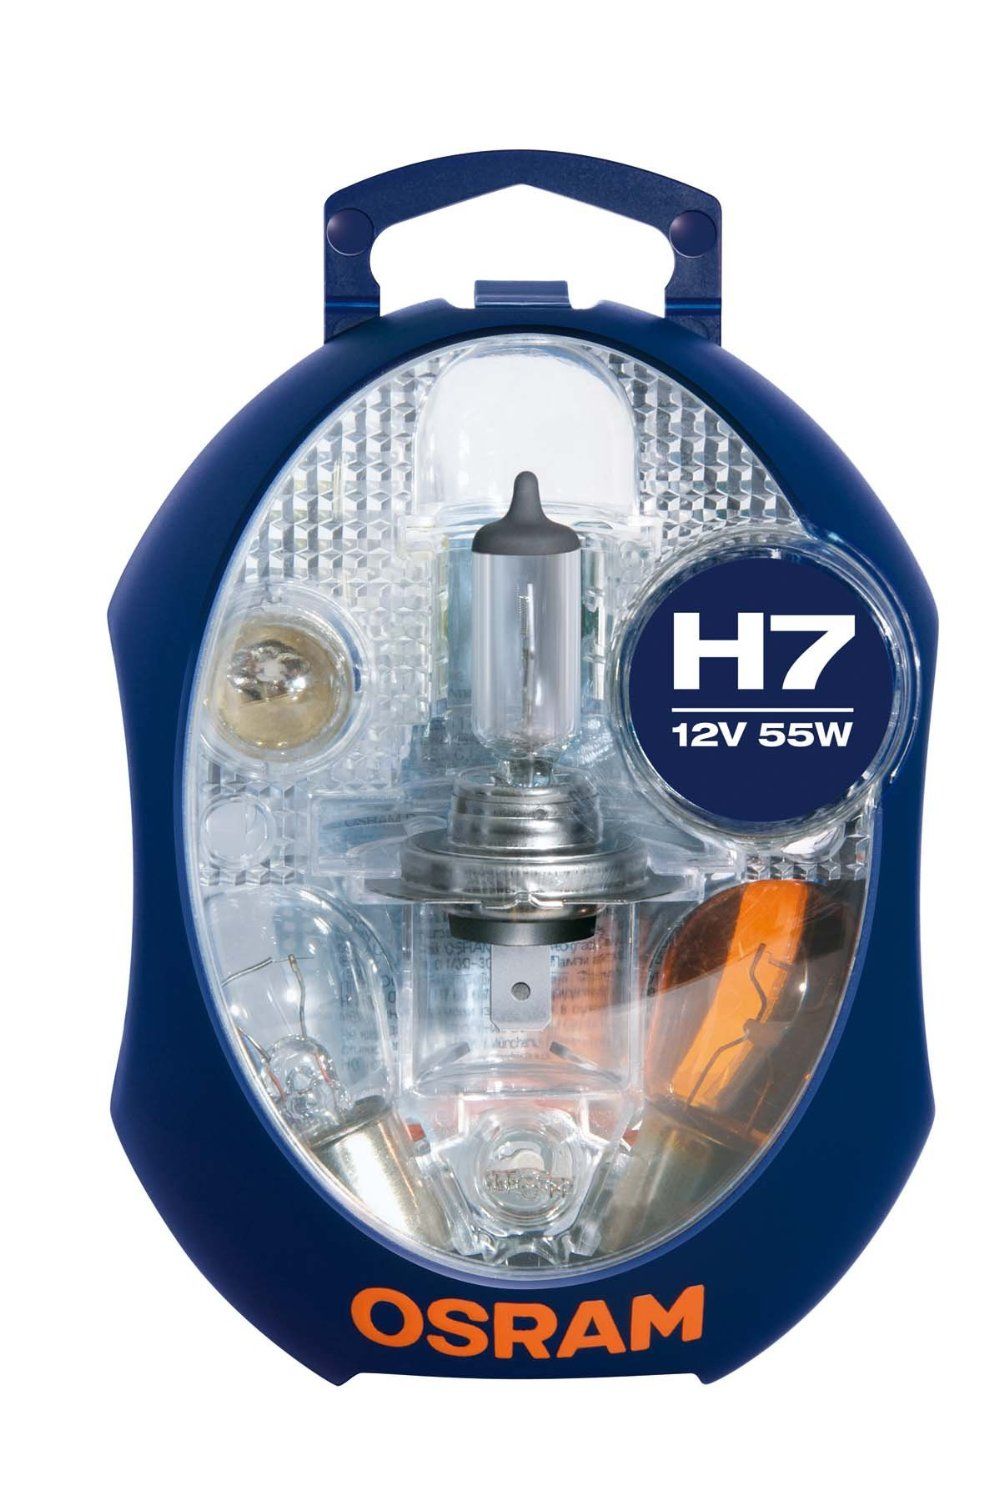 H 7 Lampen Set in Box 12Volt neu OVP Auto Ersatzlampen in Leipzig - Südwest, Ersatz- & Reparaturteile